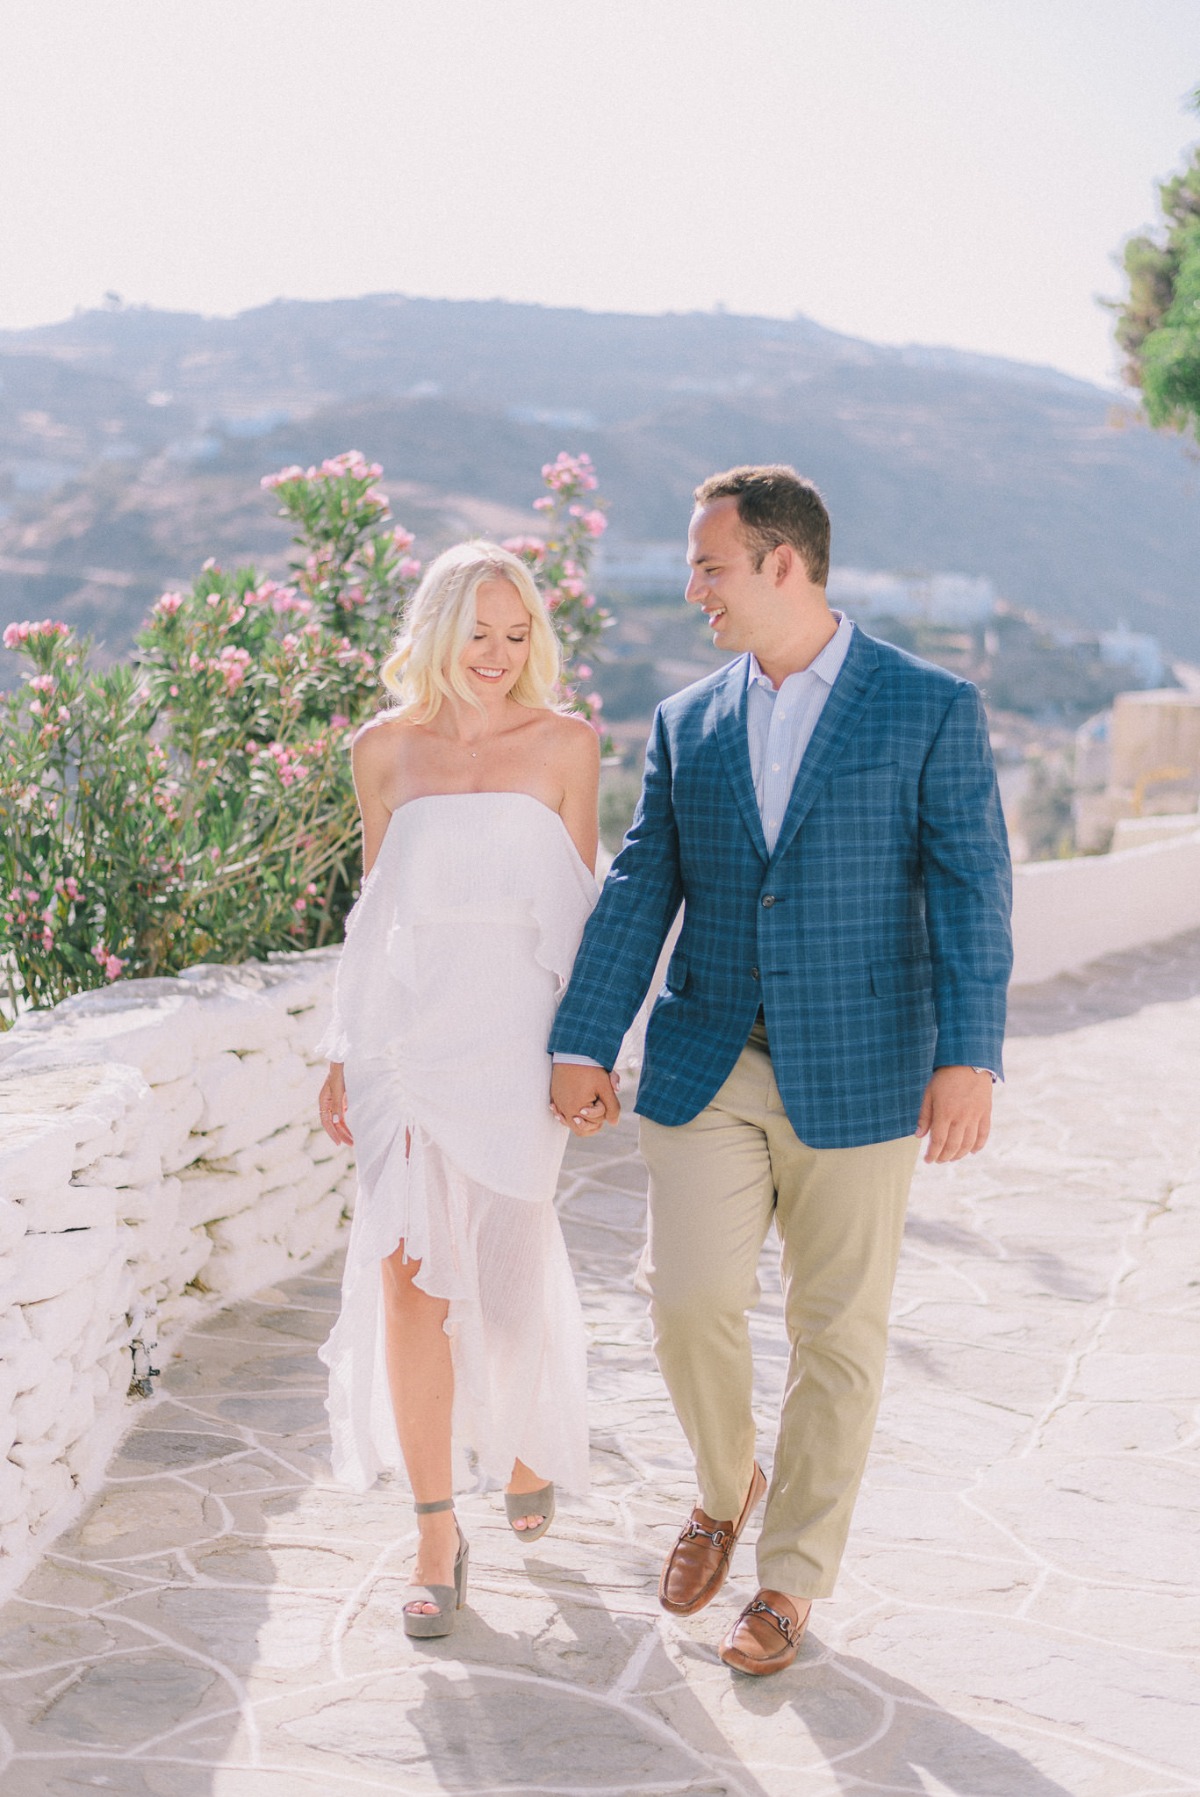 Get married in Greece